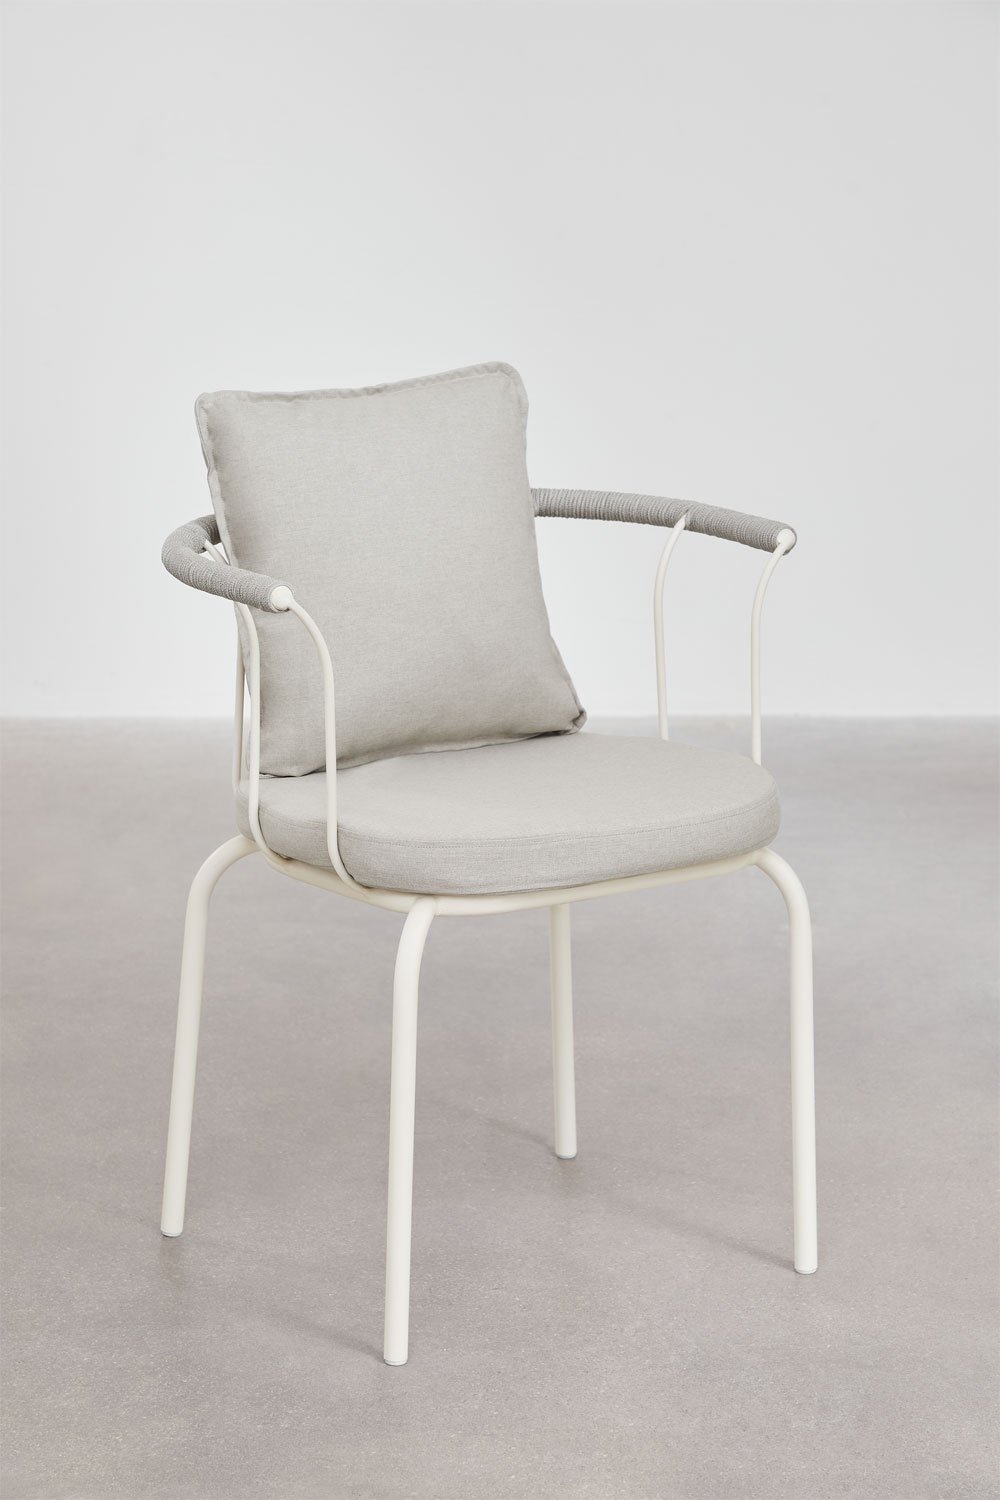 Stackable Garden Chair with Armrests in Boucid Steel, gallery image 1